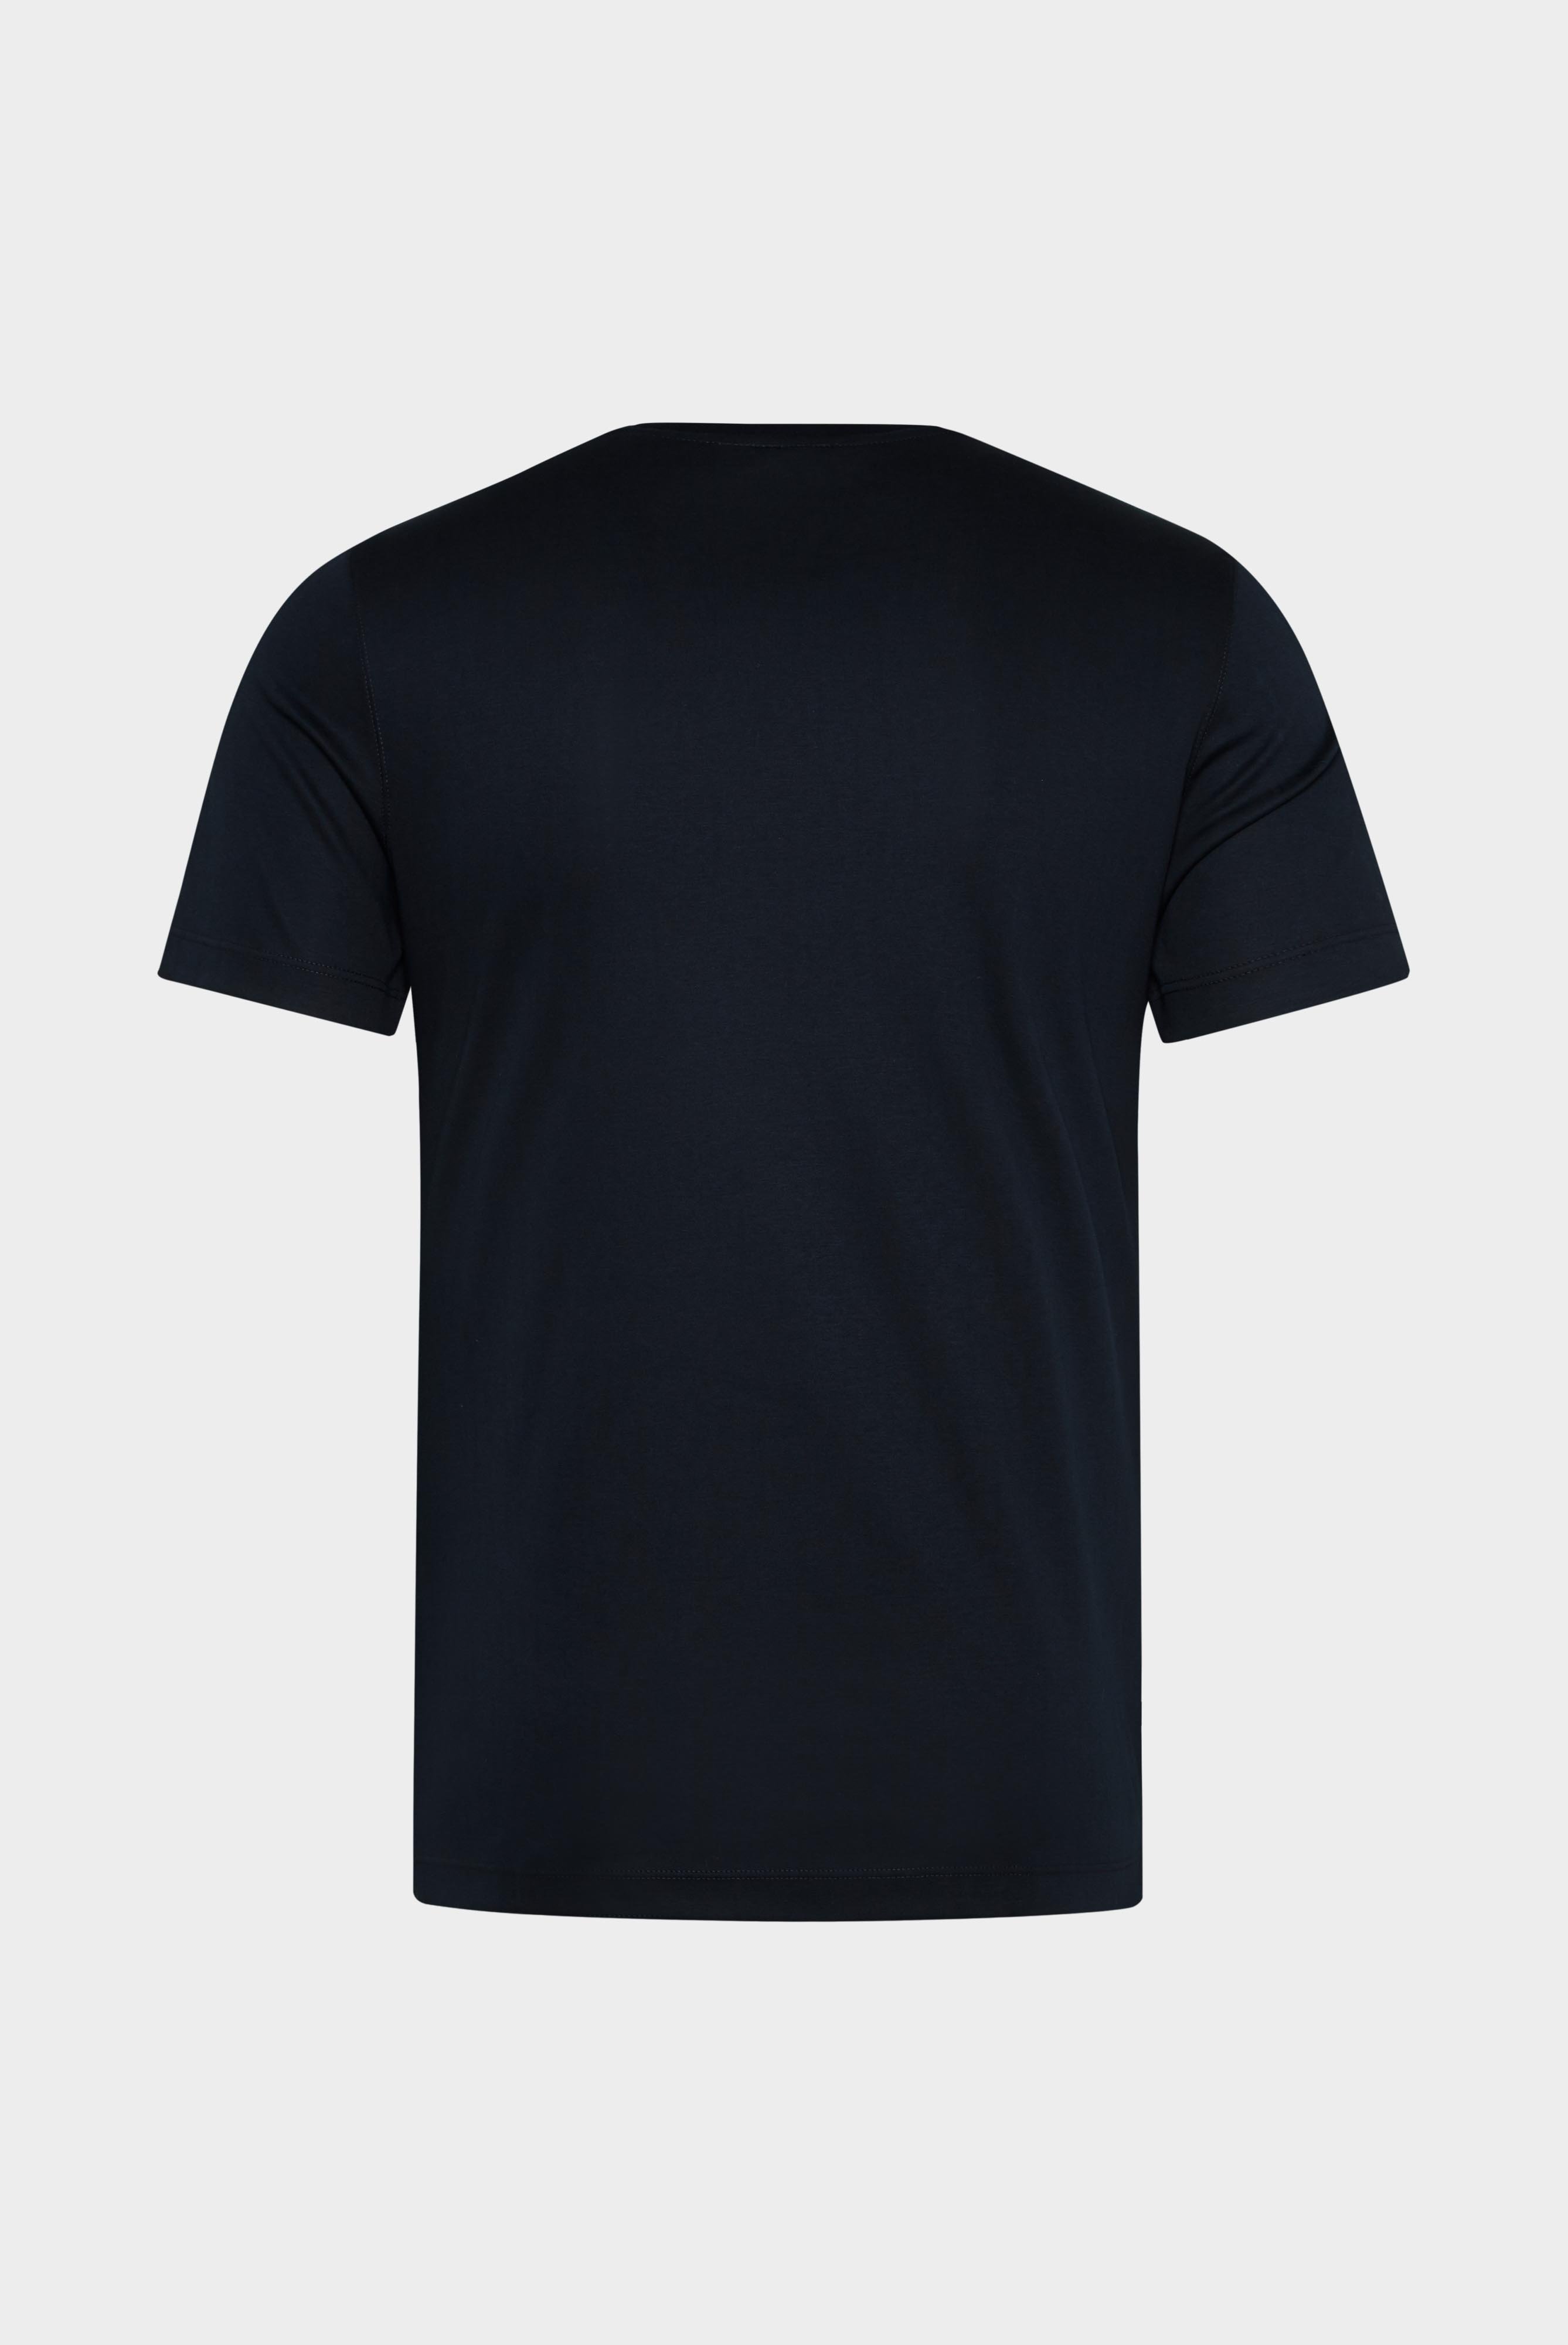 T-Shirts+Swiss Cotton Jersey Crew Neck T-Shirt+20.1717.UX.180031.790.L